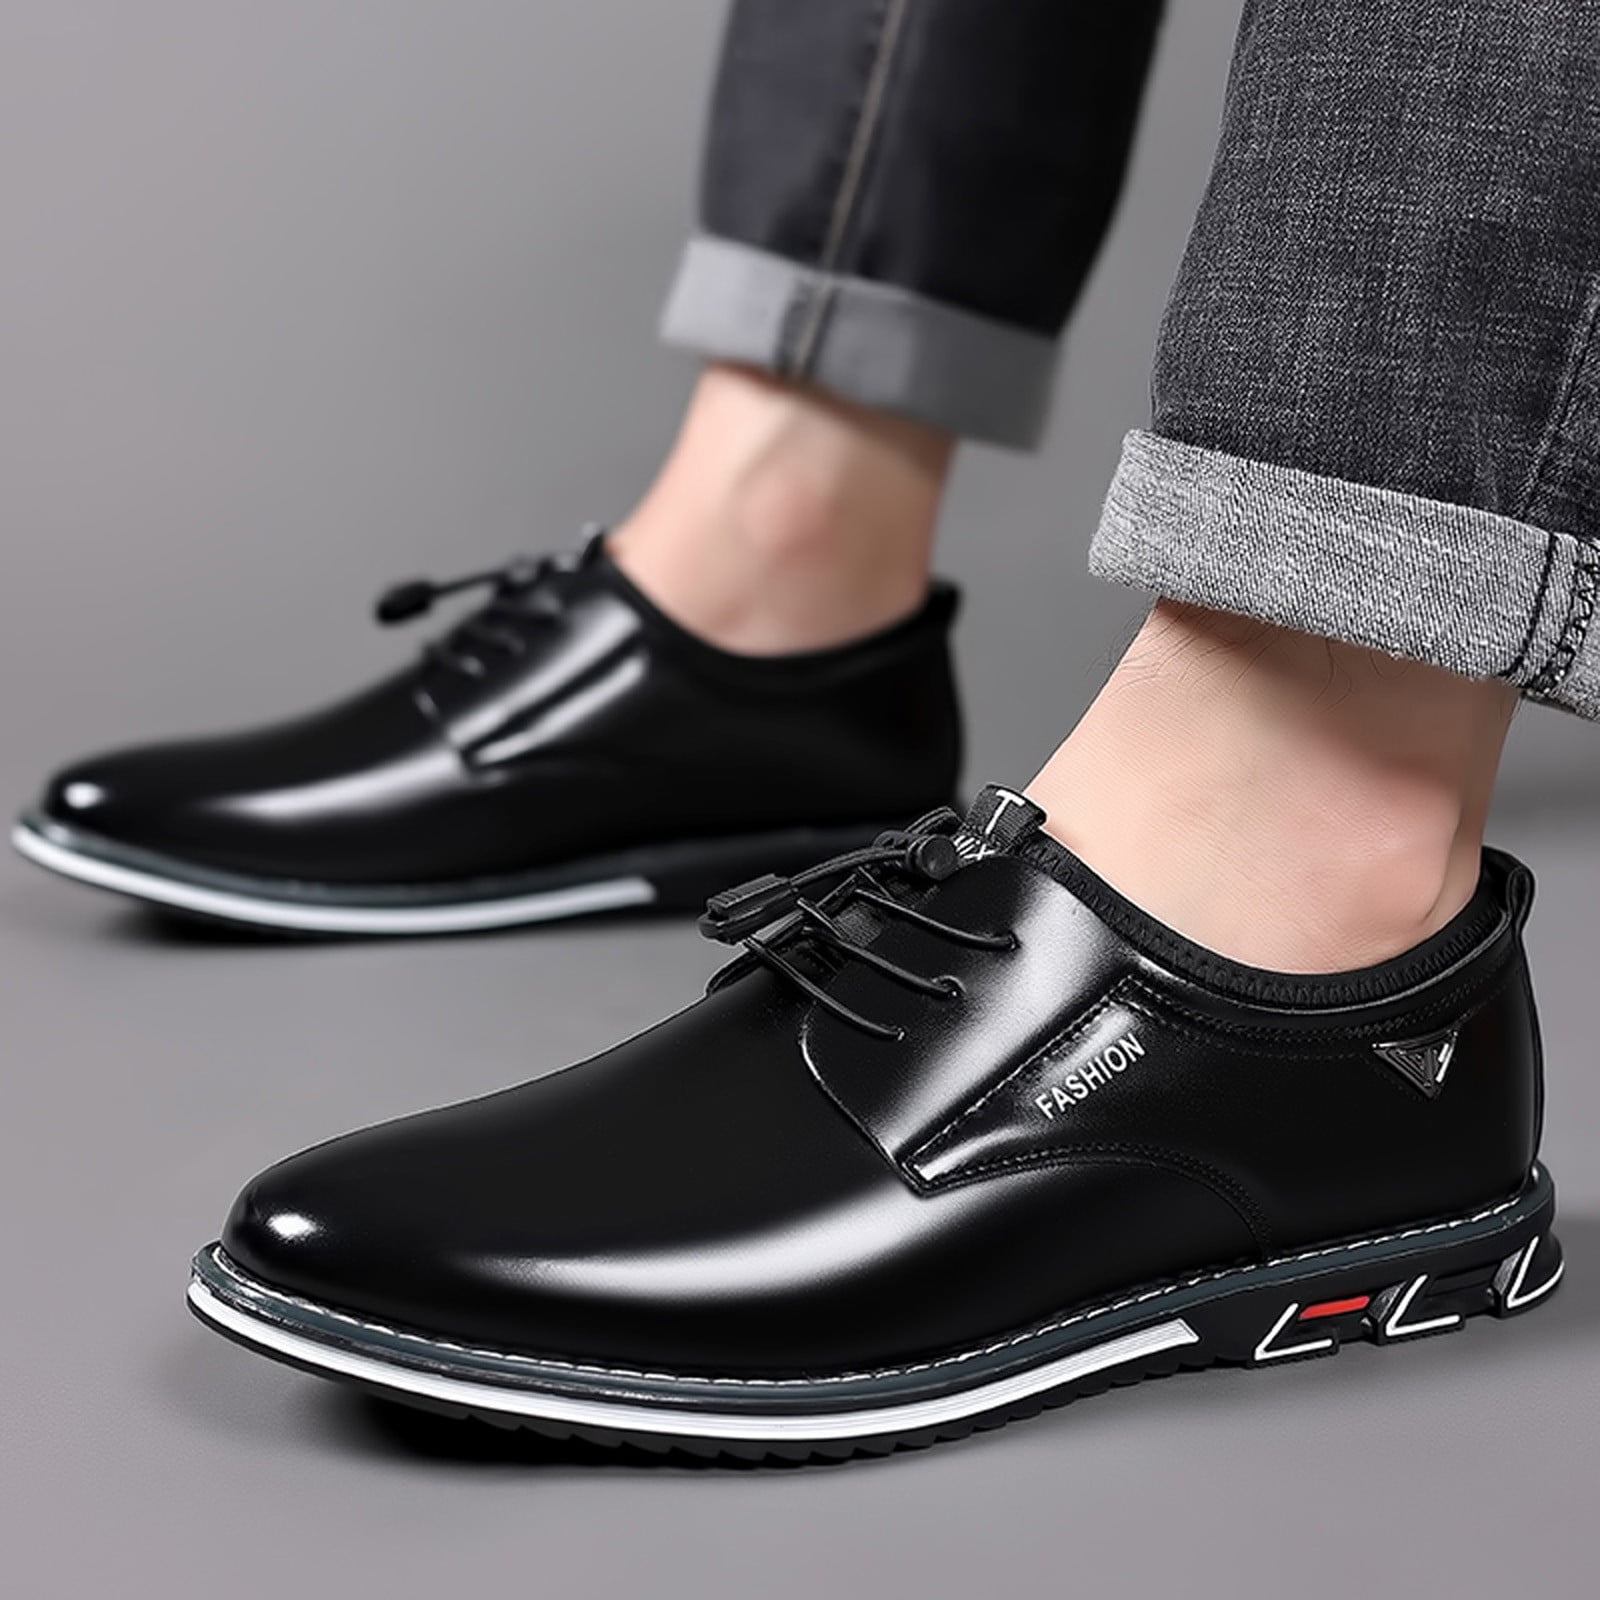 comfort dress shoes for men